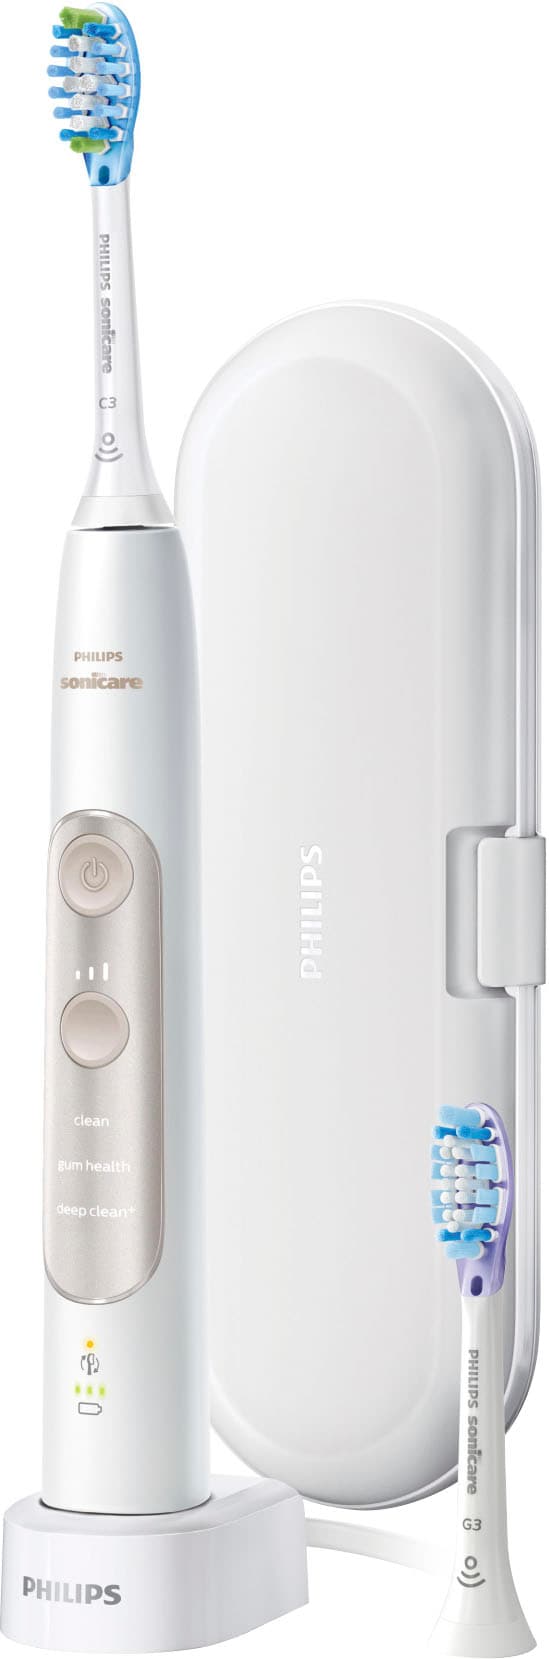 Philips Sonicare Power Flosser & Toothbrush System 7000, HX3921 - White_18